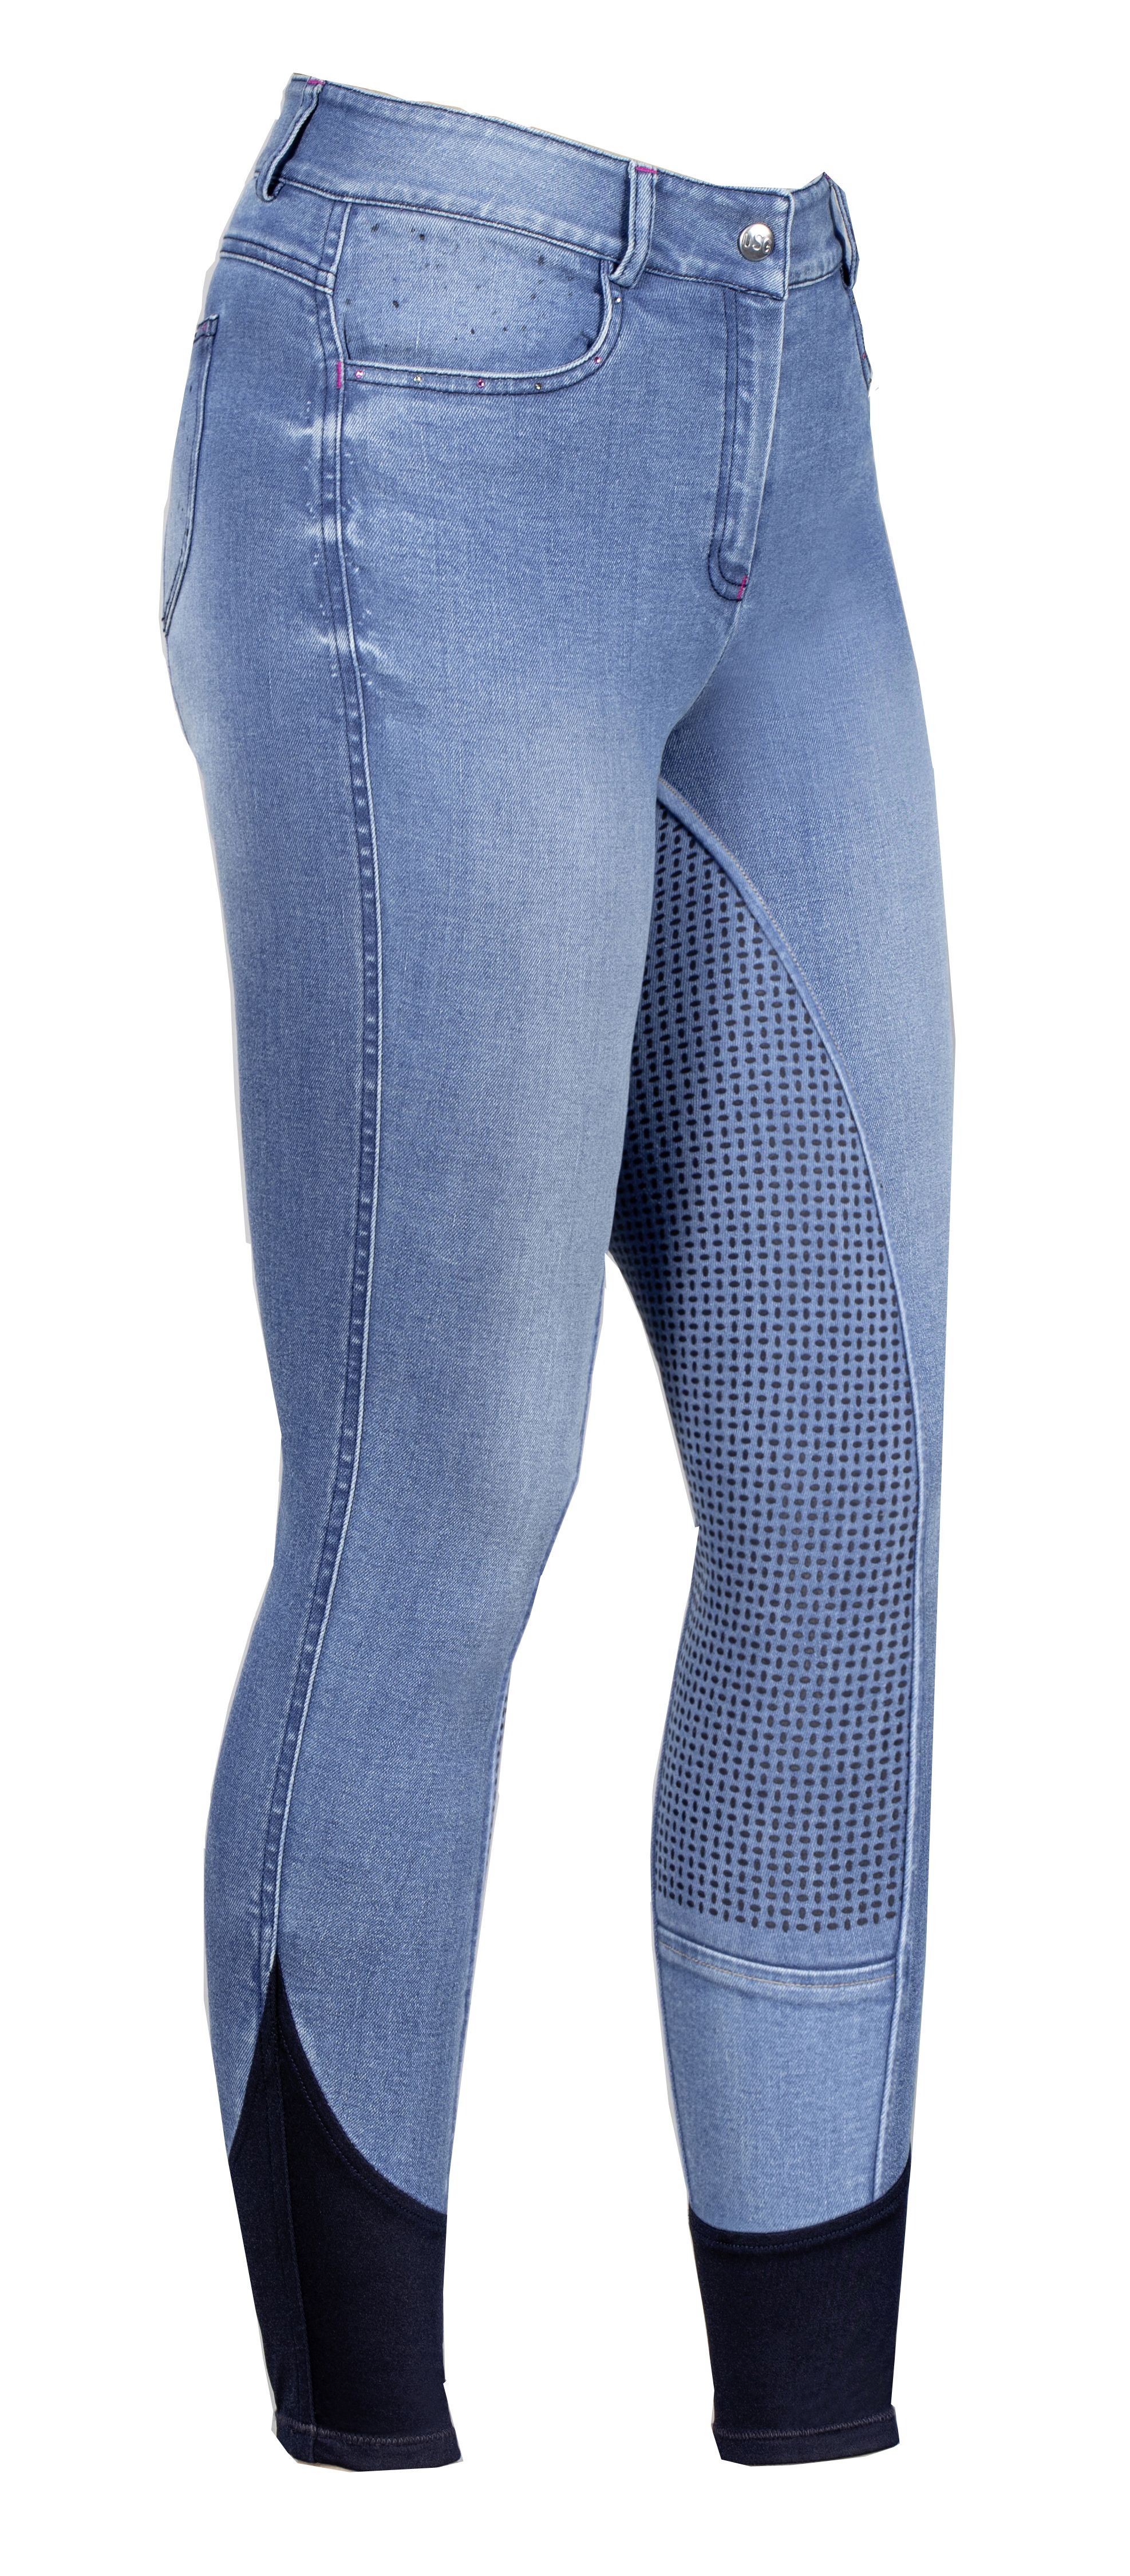 Jeansreithose Kimberly, Top-Grip Vollbesatz, elast. Beinabschluss